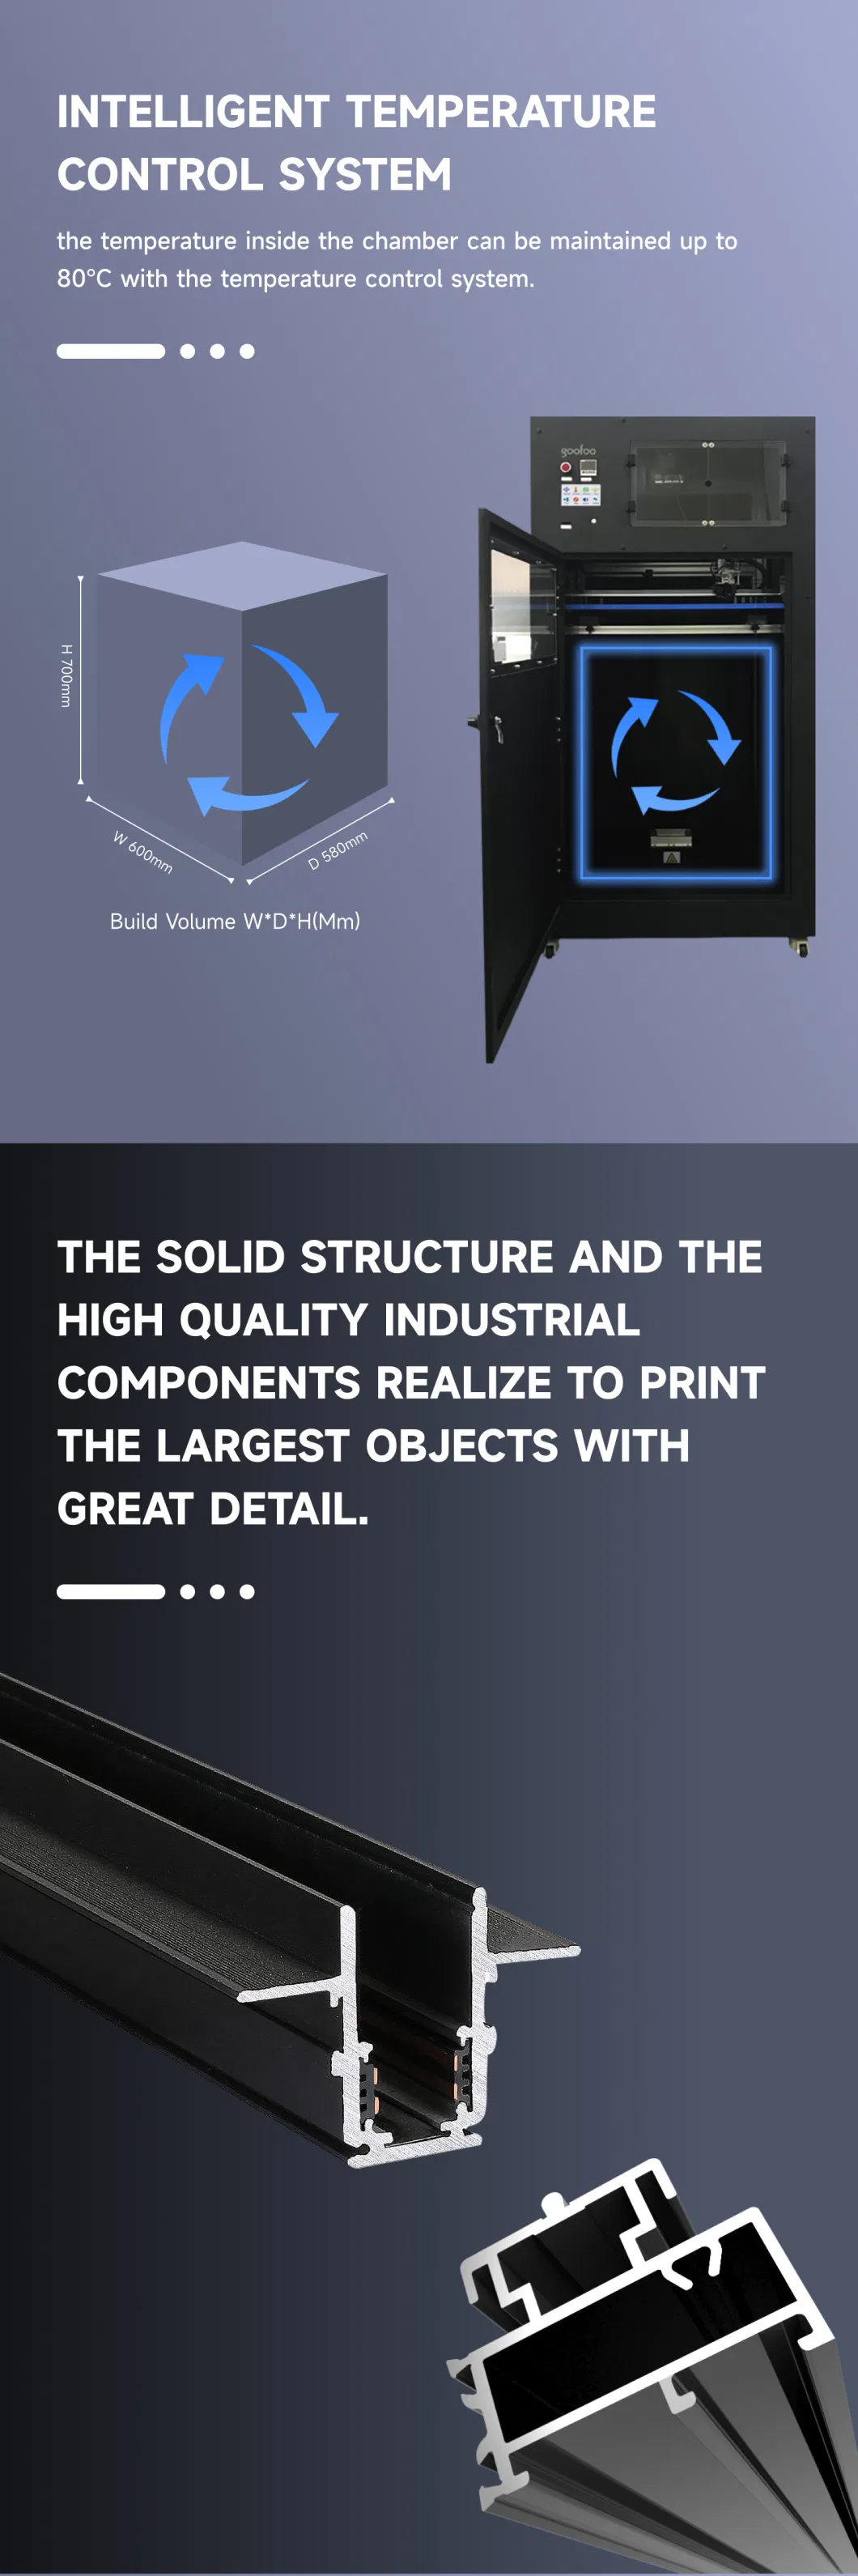 Rapid Prototyping Industry Larger Build Volume 600*580*700mm Fdm 3D Printer for Big 3D Industrial D Printer